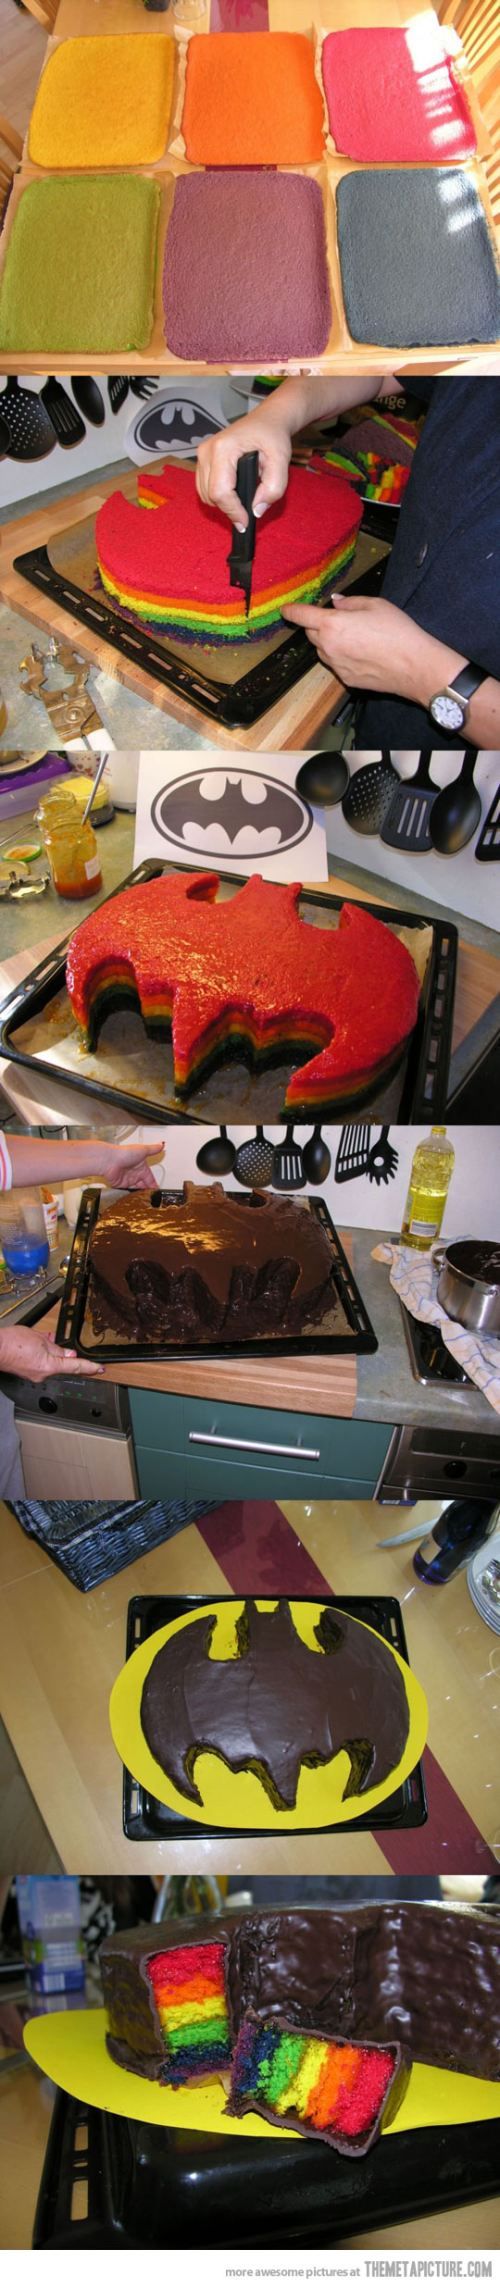 Batman layered cake…. DOOOOO IT! Or some other equally awesome superhero cake.